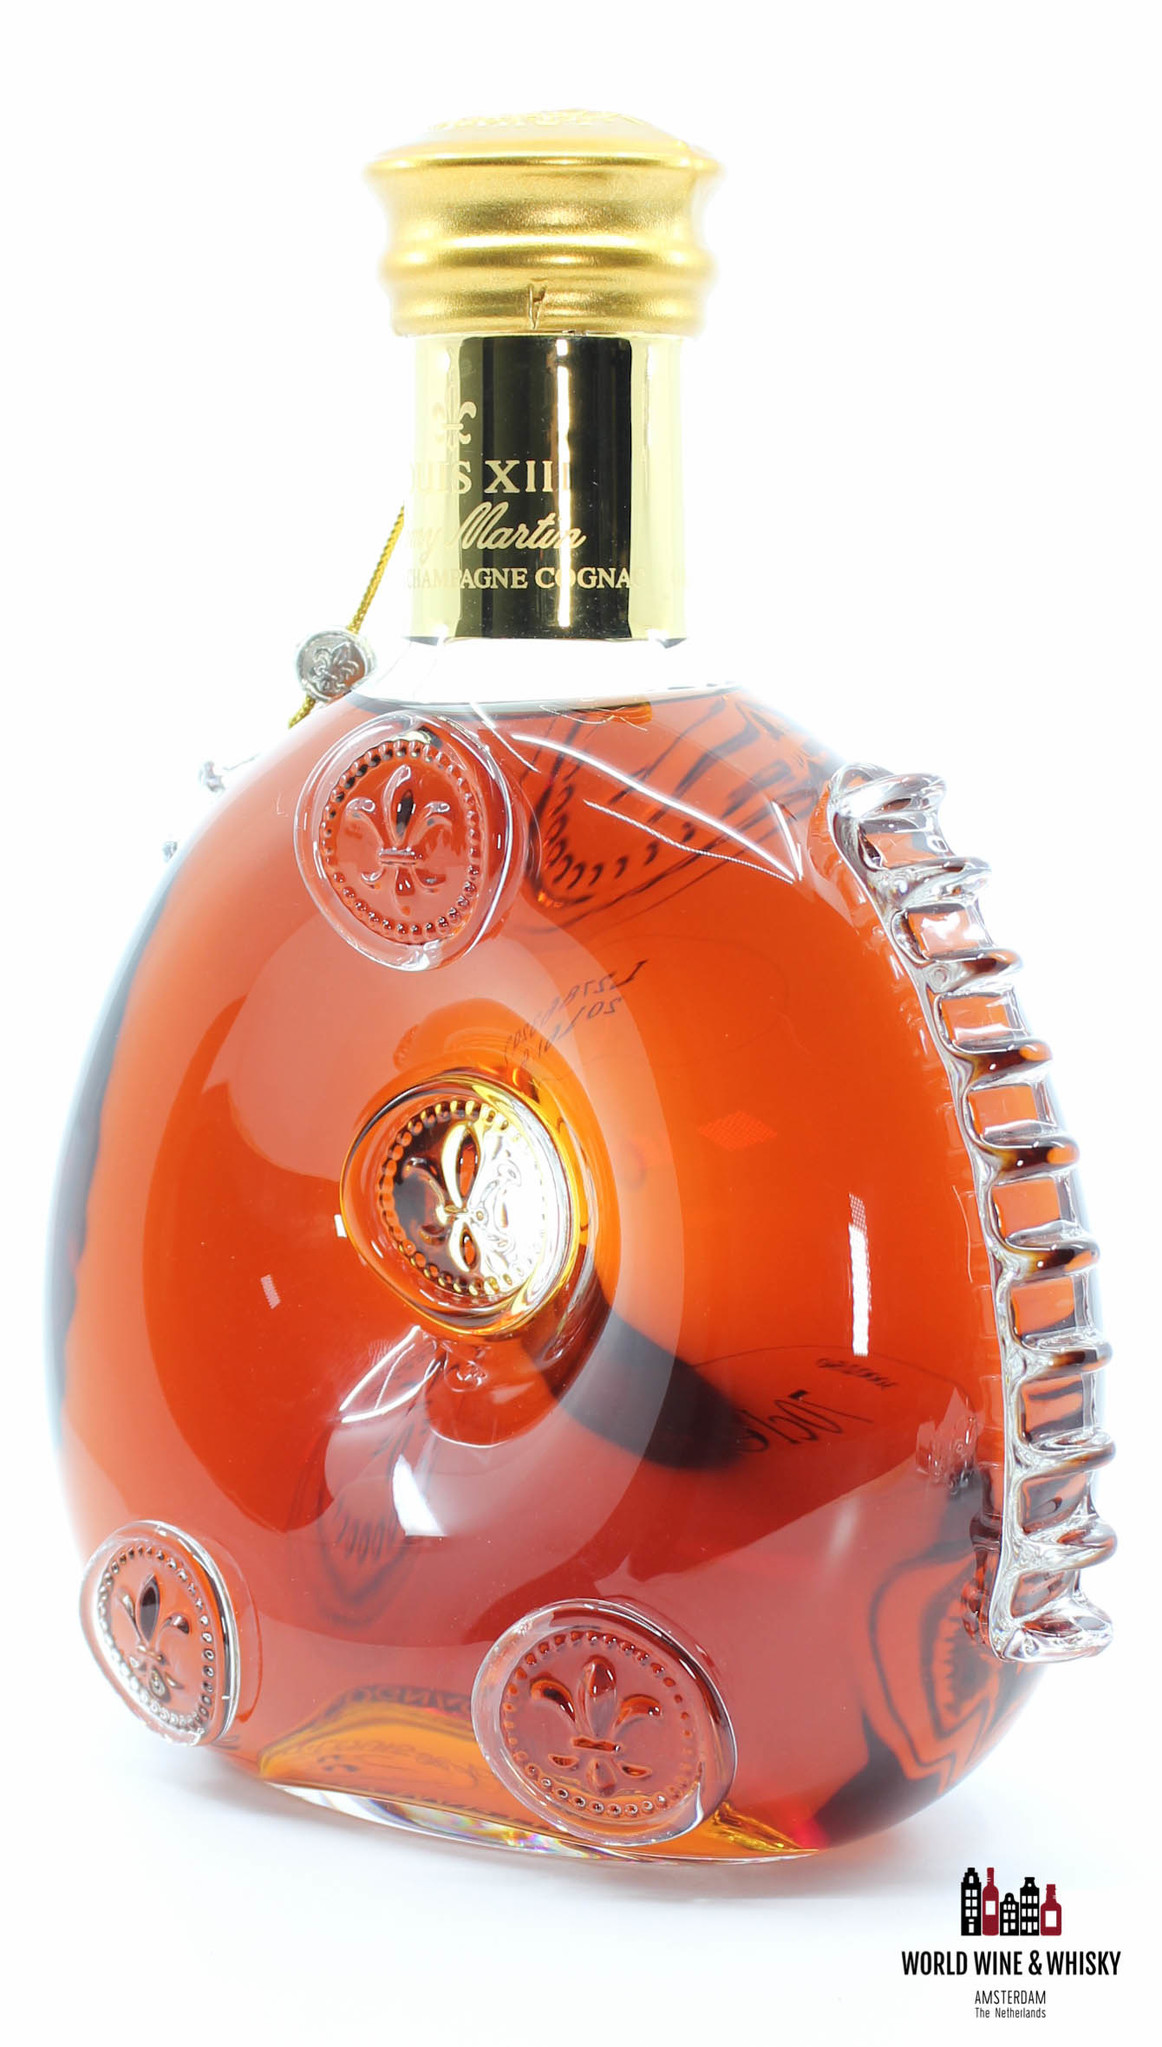 Rémy Martin Louis XIII Cognac: Buy Now